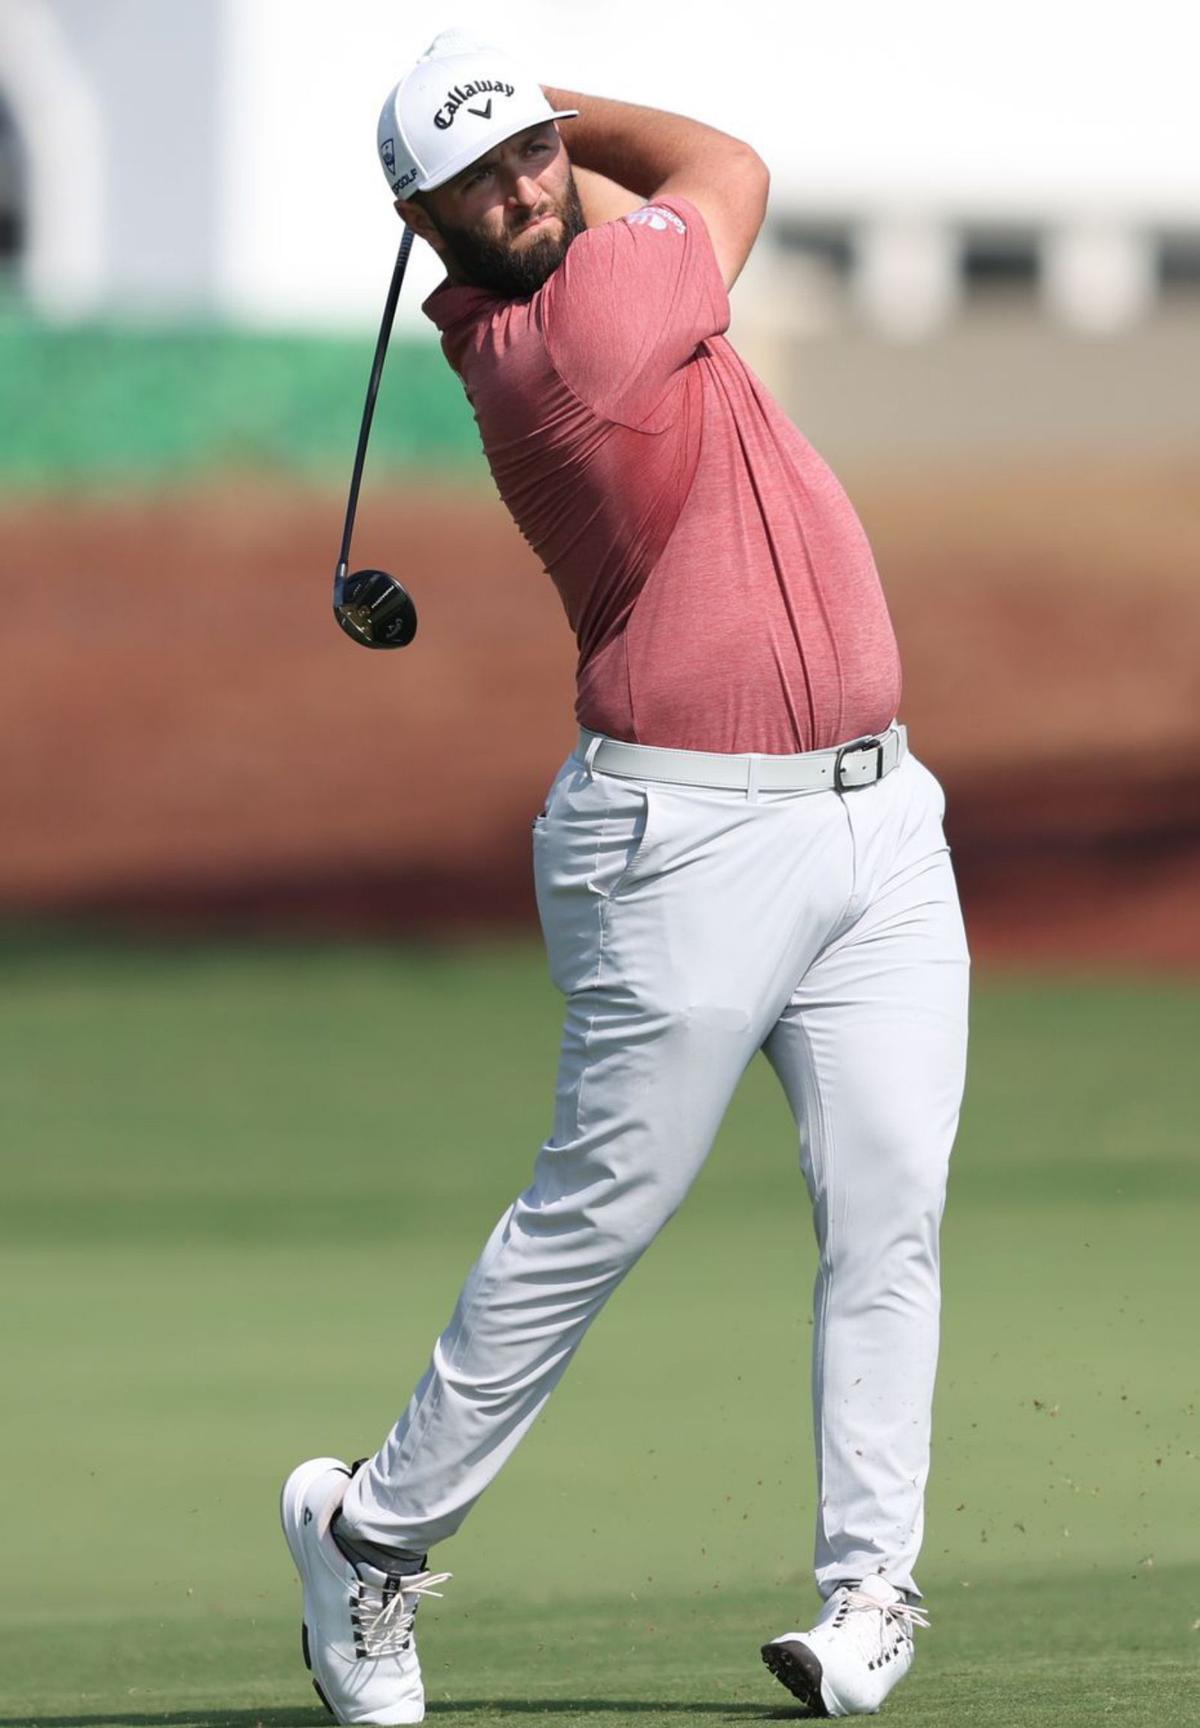 El PGA Tour suspèn Jon Rahm després de firmar pel LIV Golf